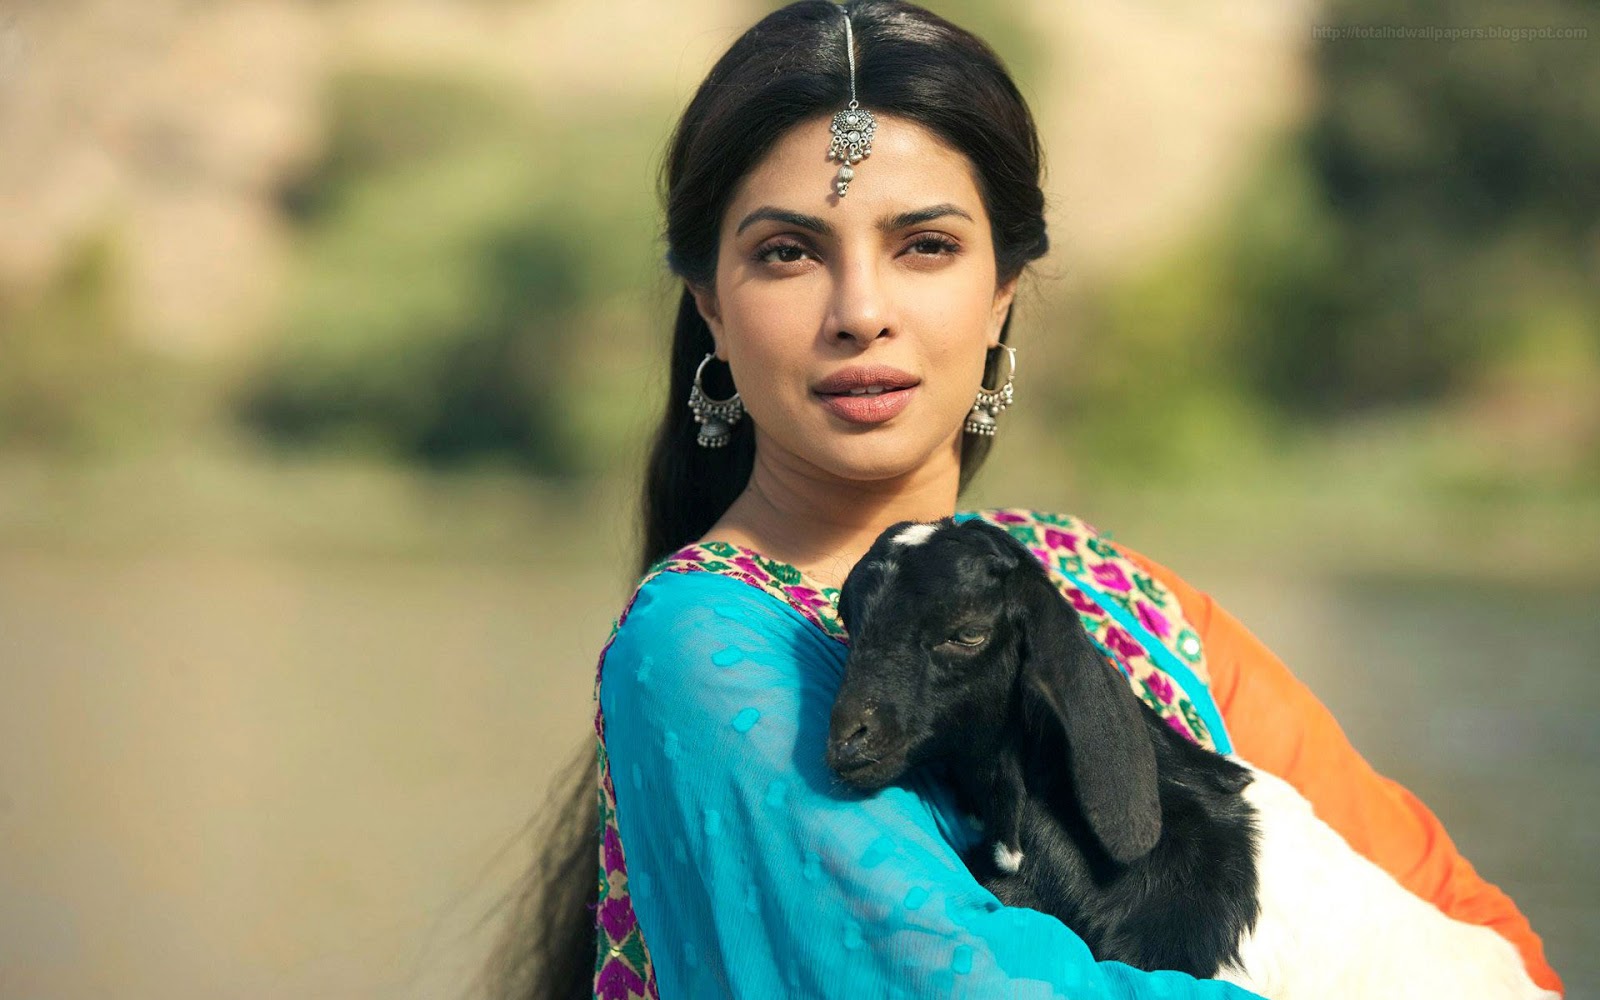 bollywood actress hd wallpapers 1080p,black hair,photography,sari,photo shoot,fawn